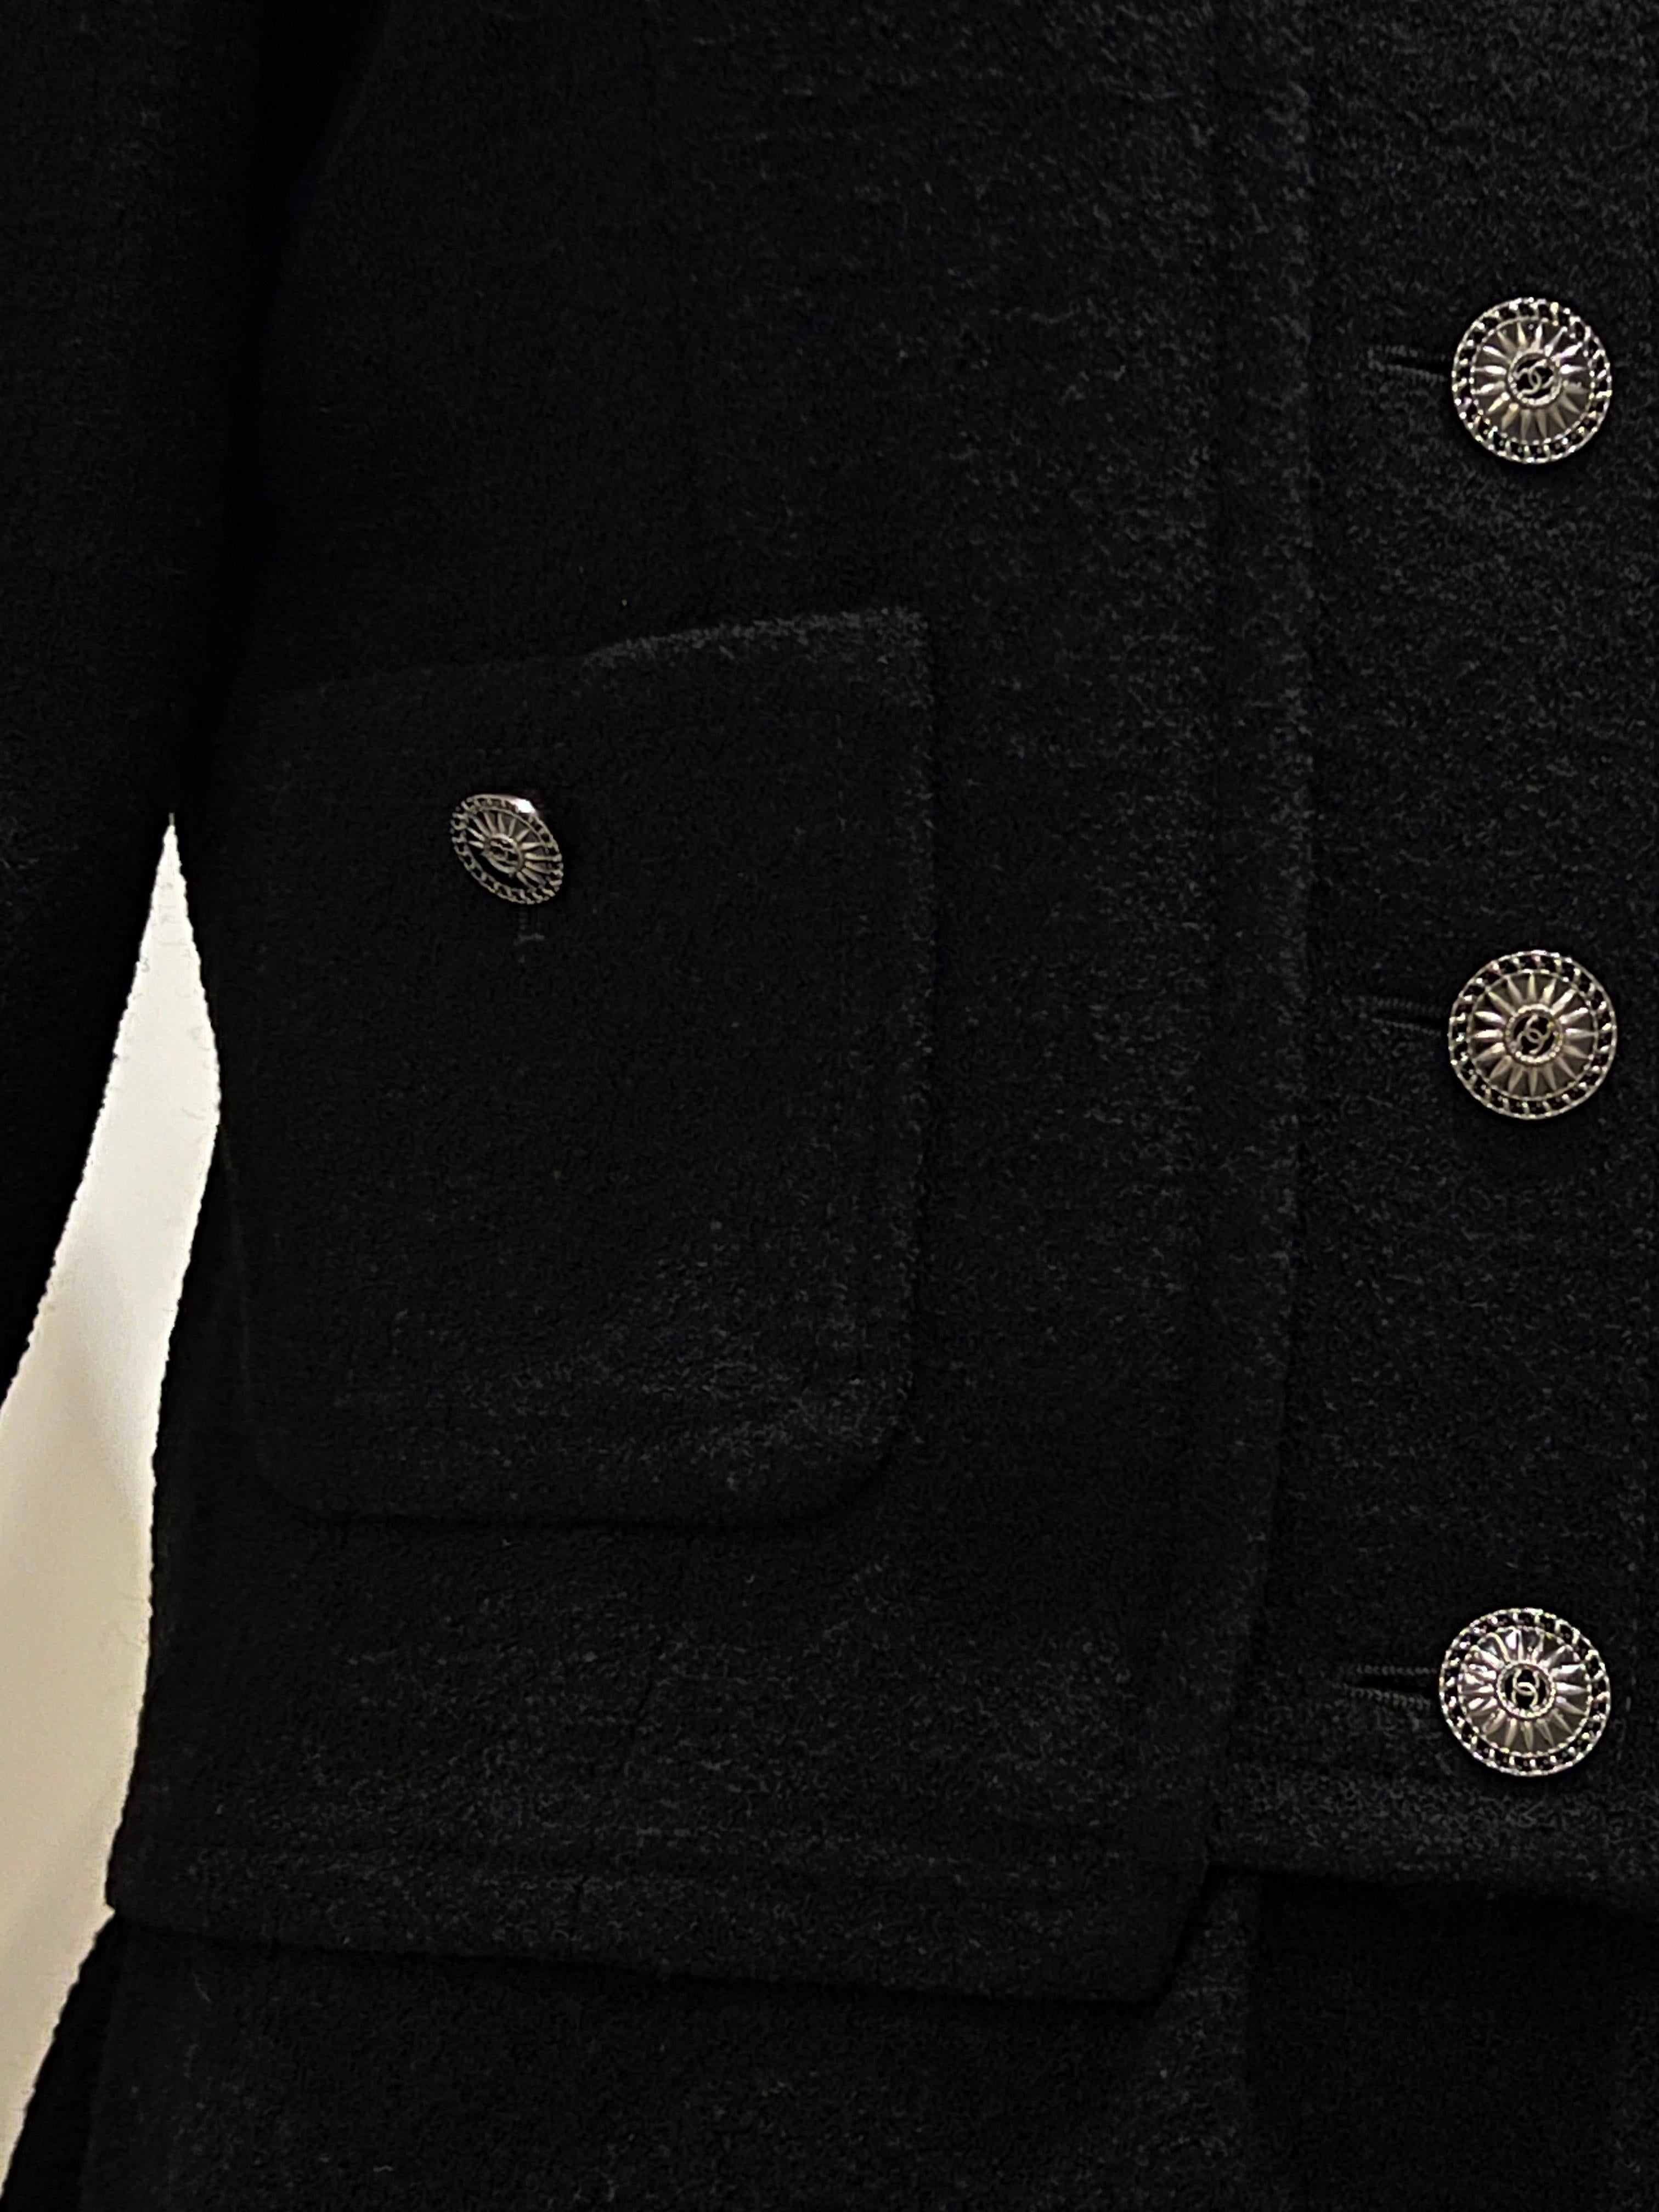 Chanel New Paris / Singapore Black Tweed Jacket and Dress Set 6